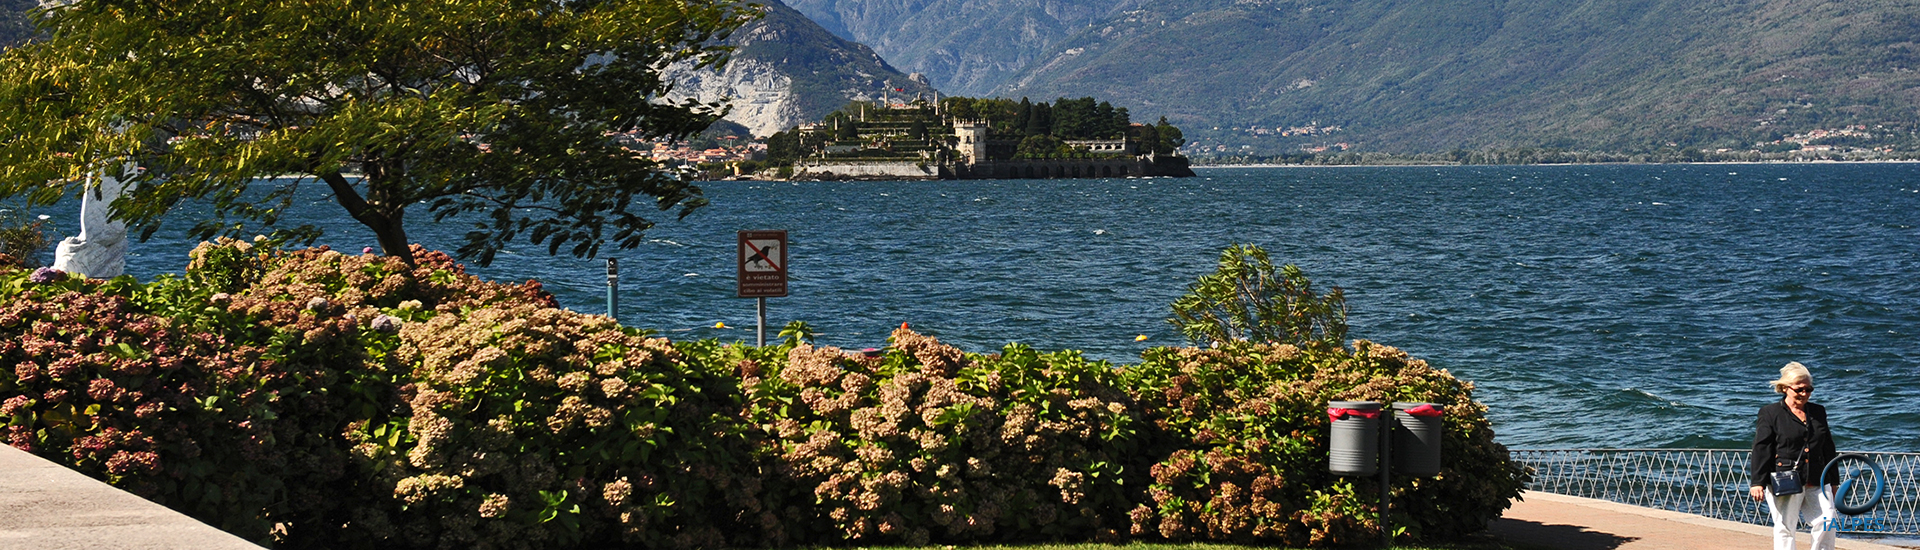 Lac Majeur, Italie